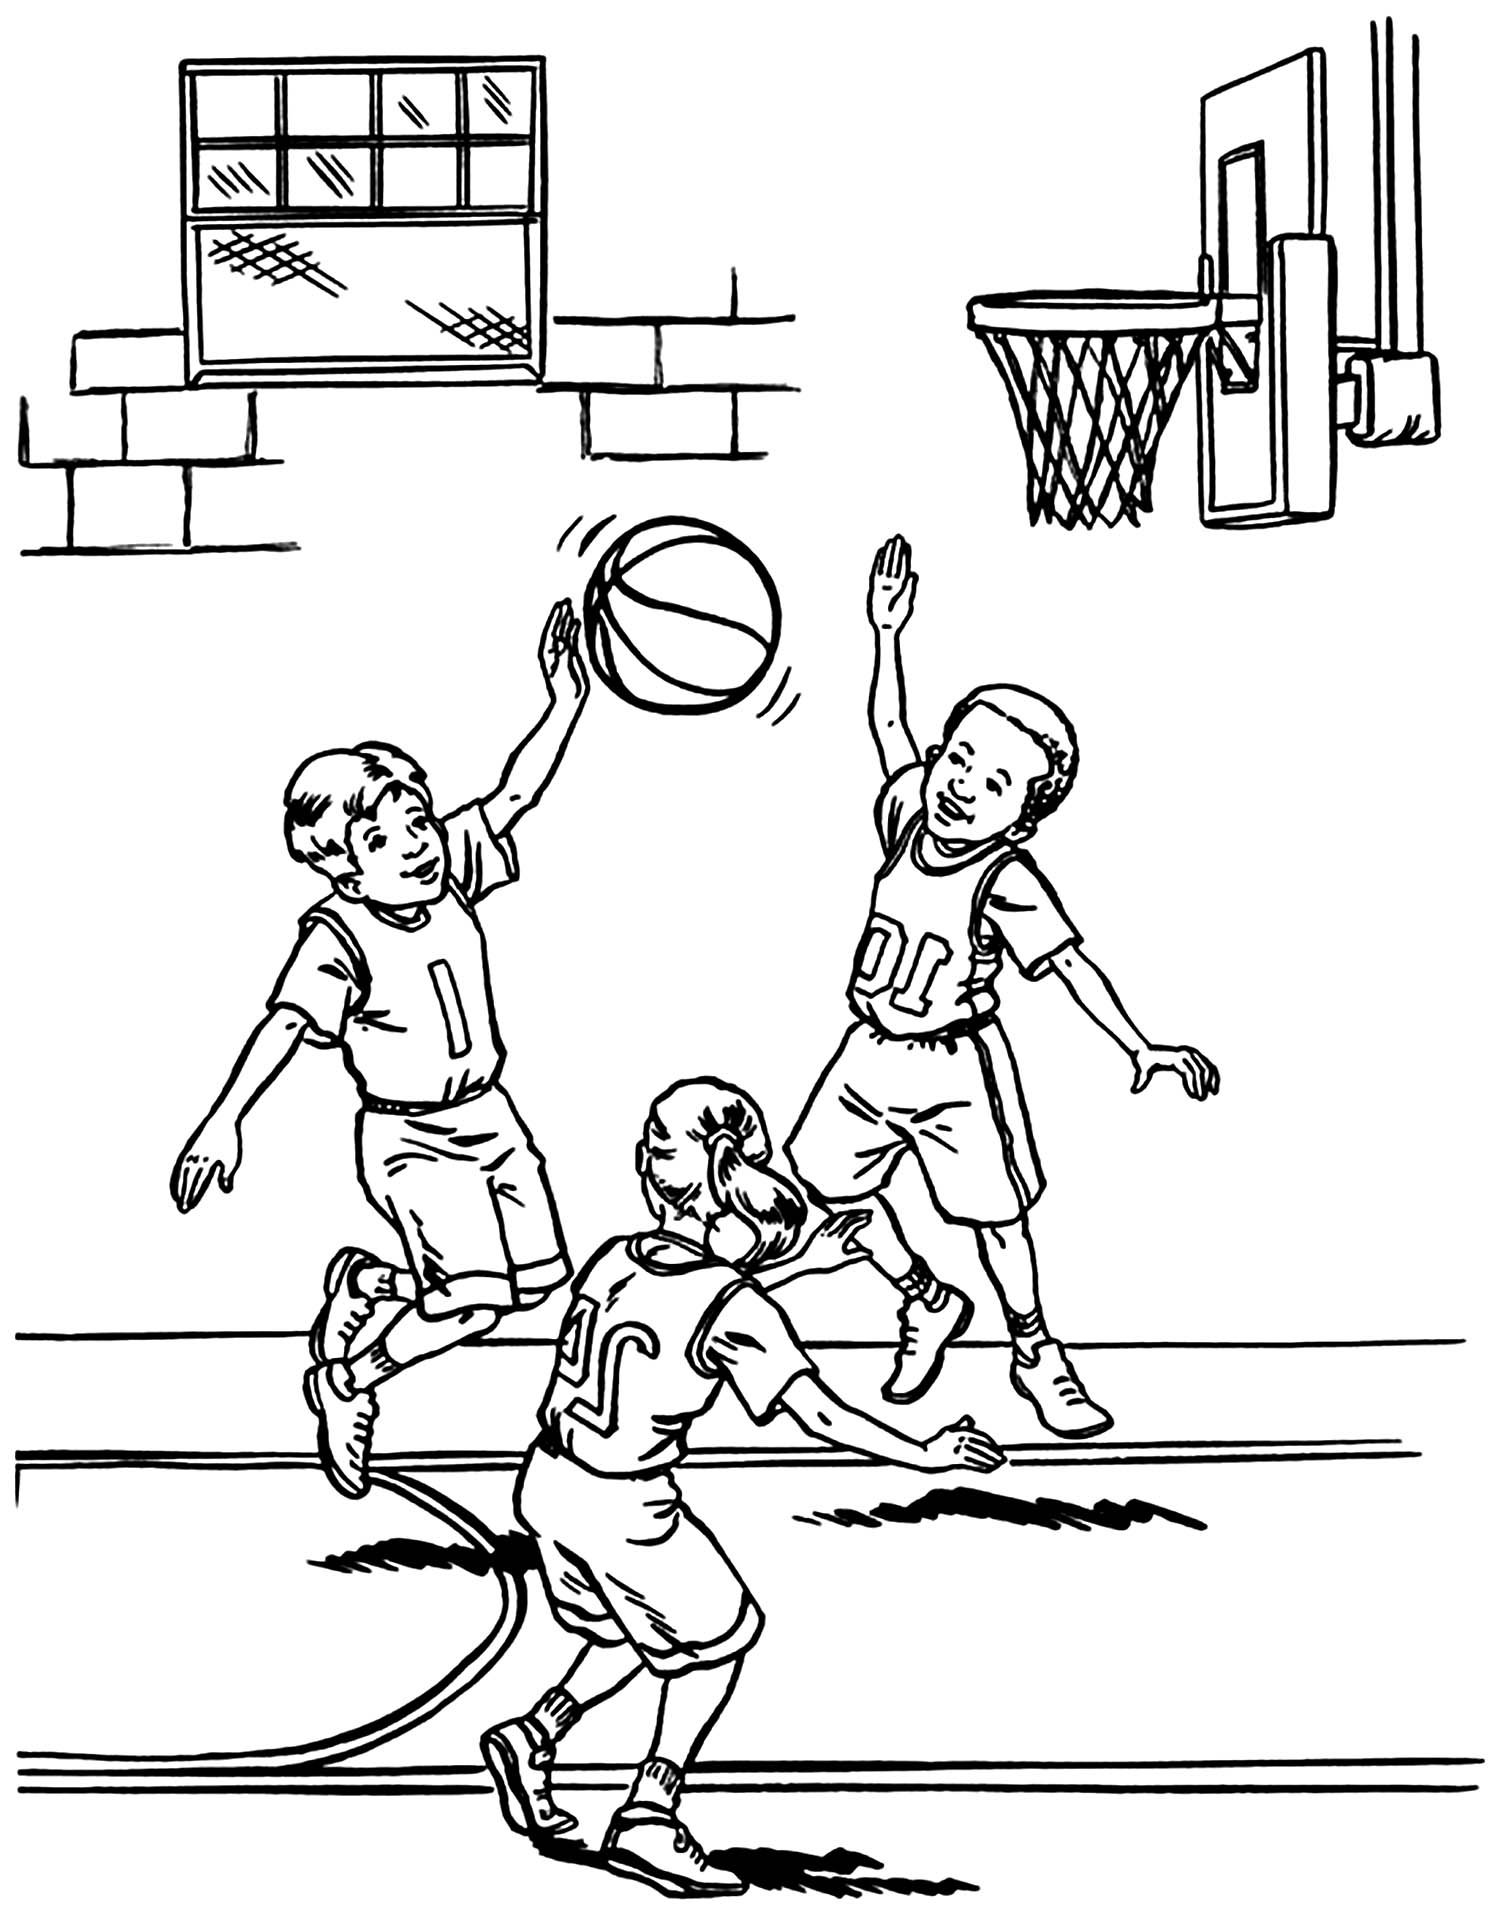 3 Kids Playing Basketball Coloring Page